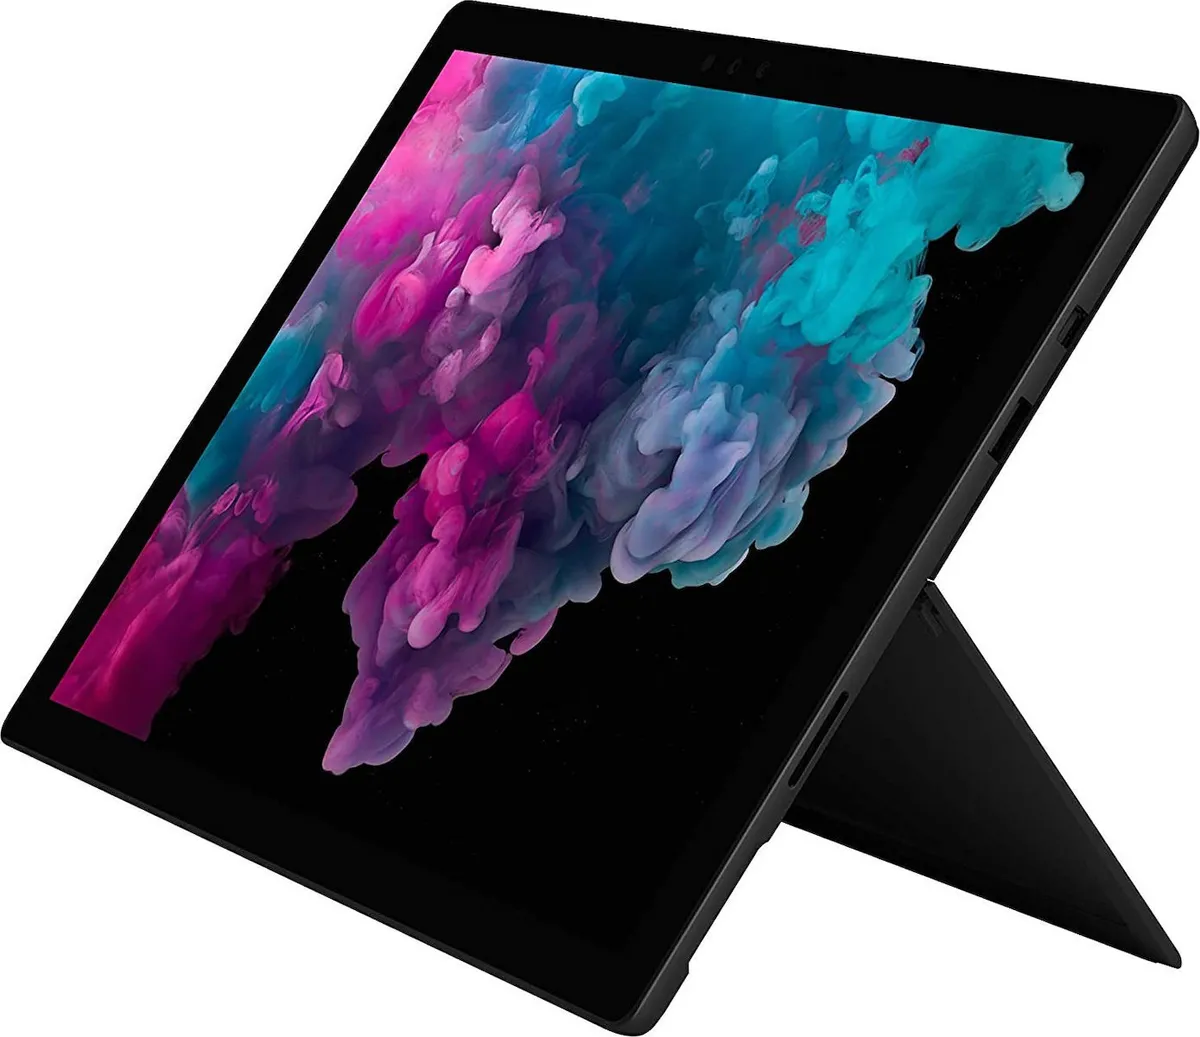 Microsoft Surface Pro 6 Black 256GB, 8GB RAM, Intel I5, 12.3"